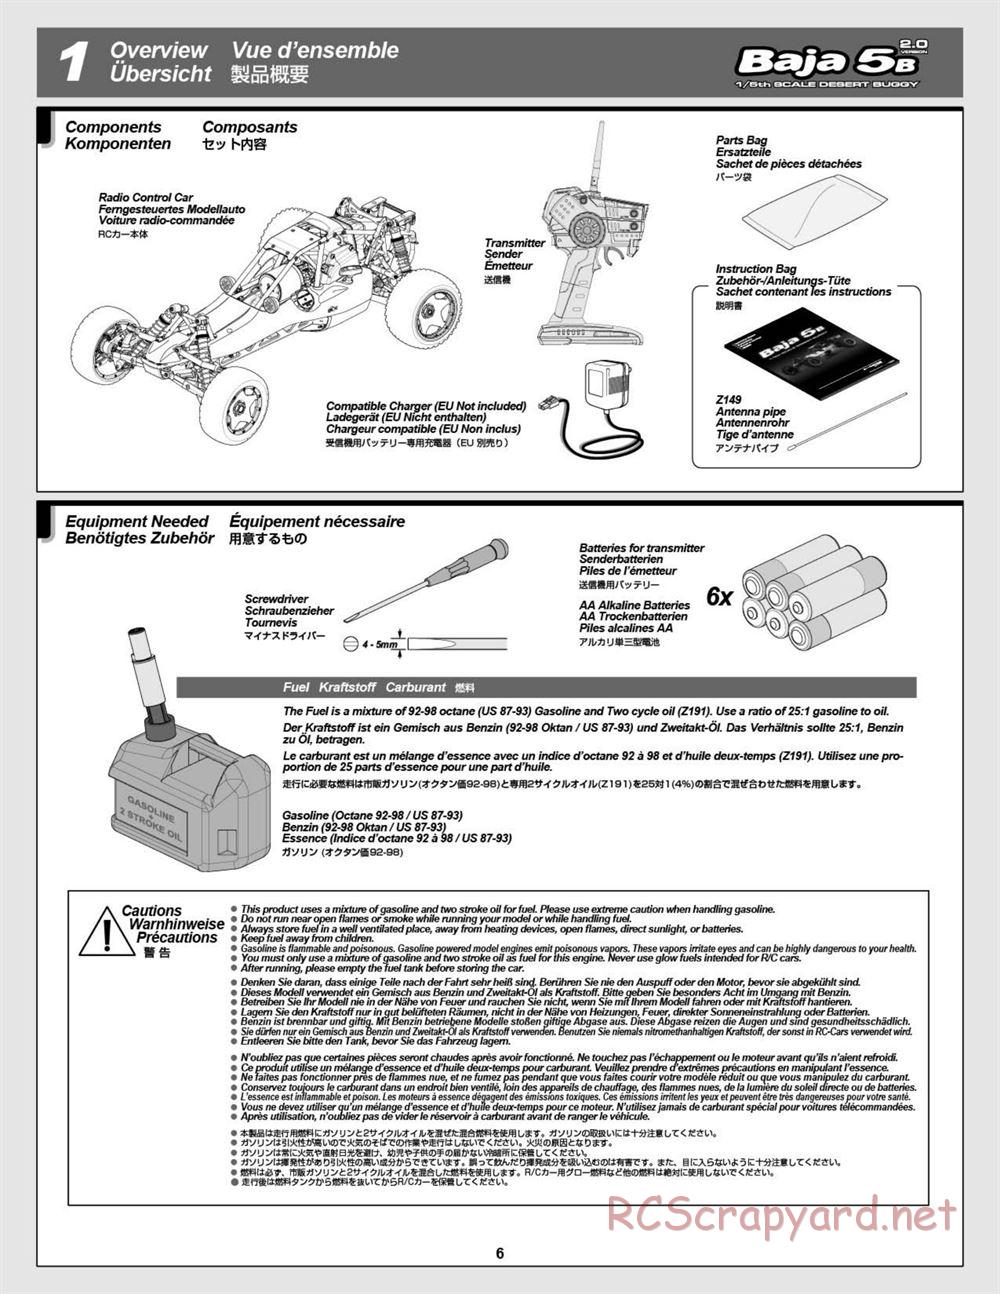 HPI - Baja 5B 2.0 RTR - Manual - Page 6